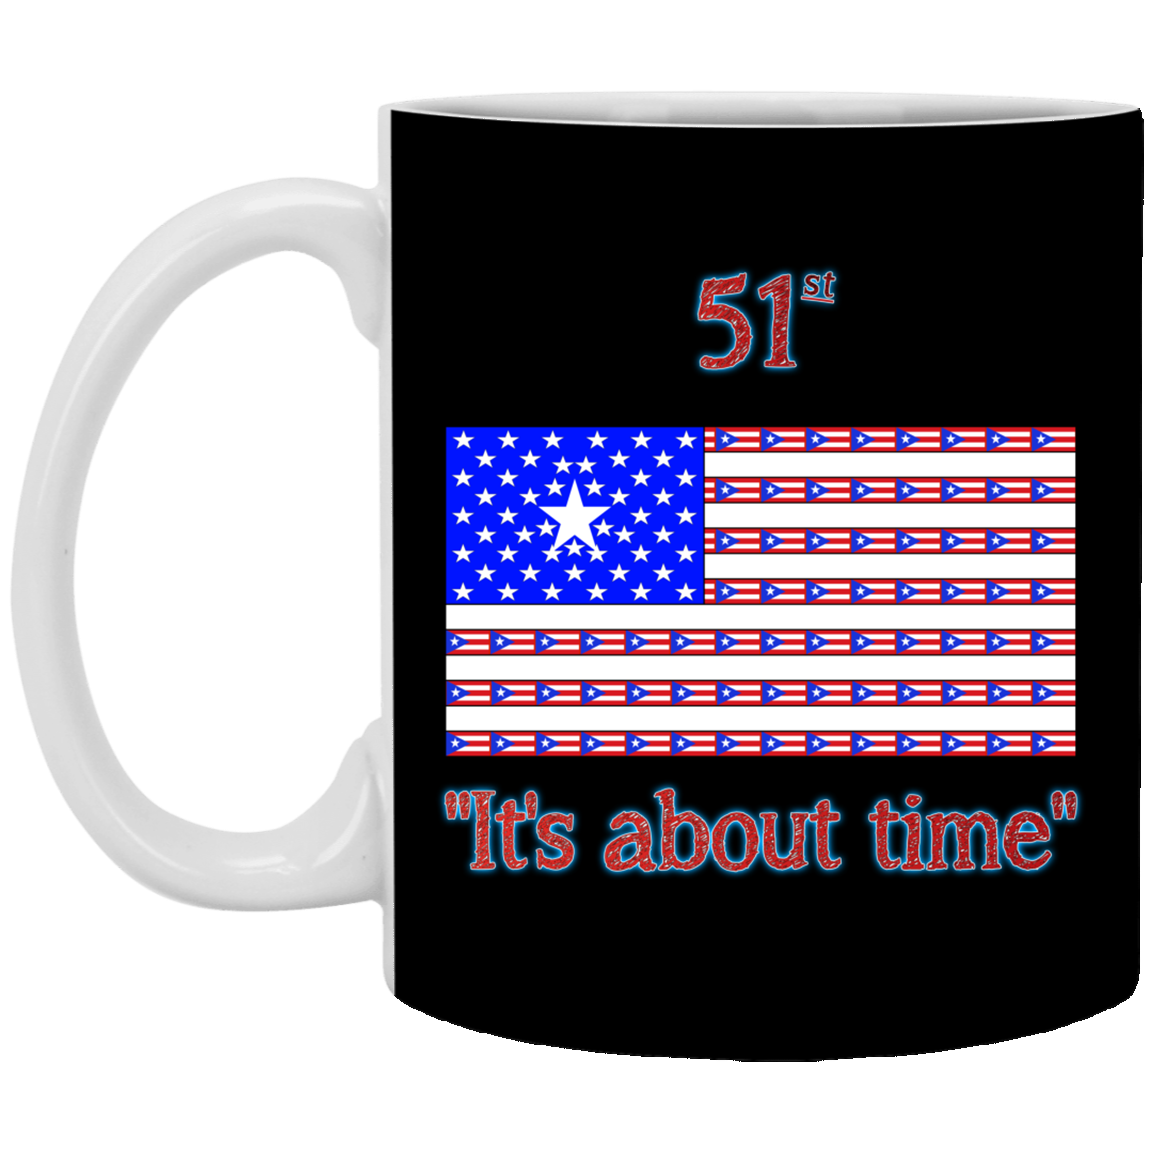 51st, It's About Time11 oz. White Mug